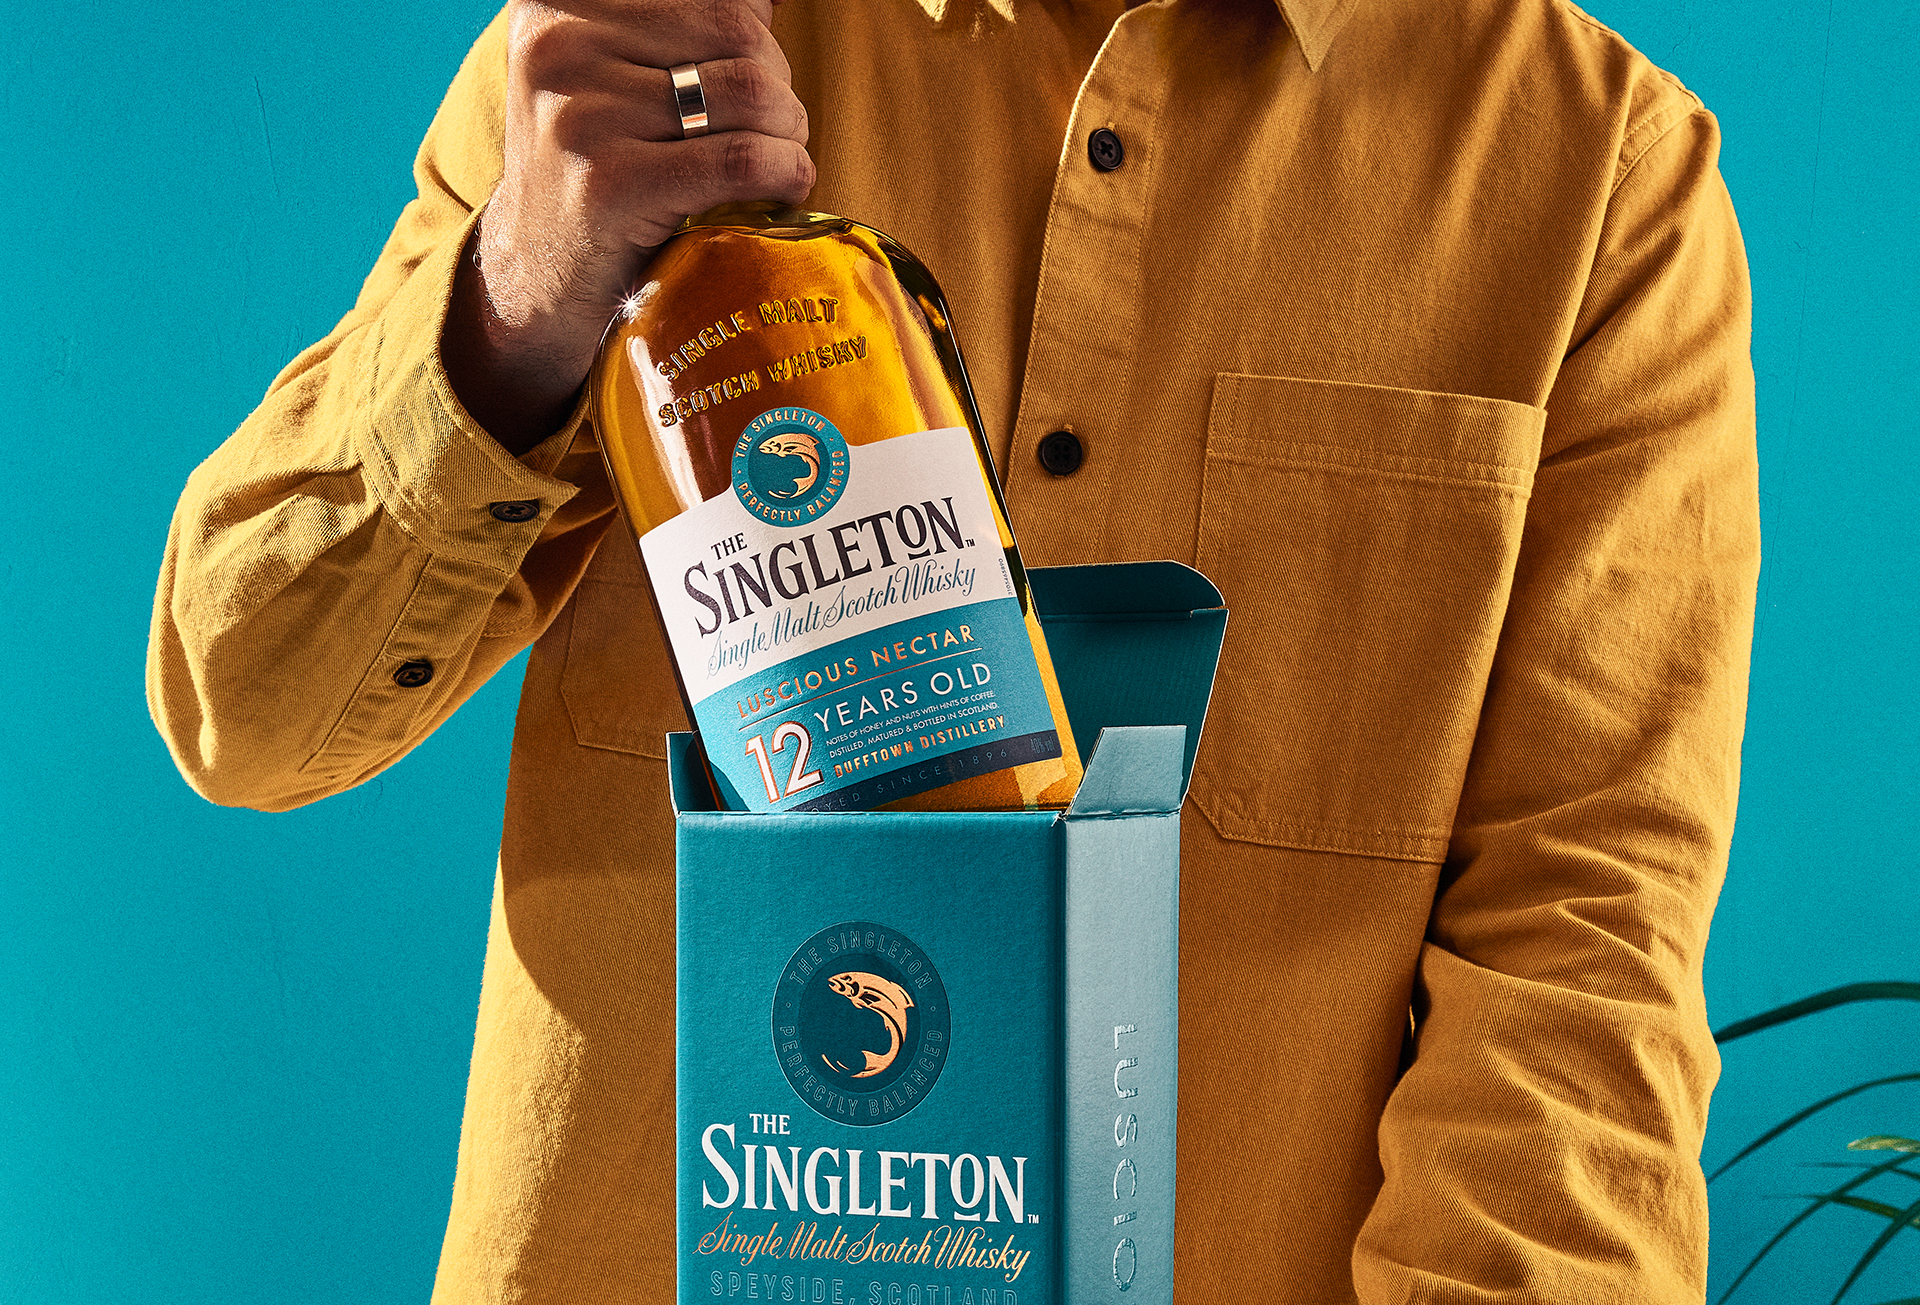 Um rapaz segurando a garrafa do whisky Singleton Of dufftown 12 anos 750ml.